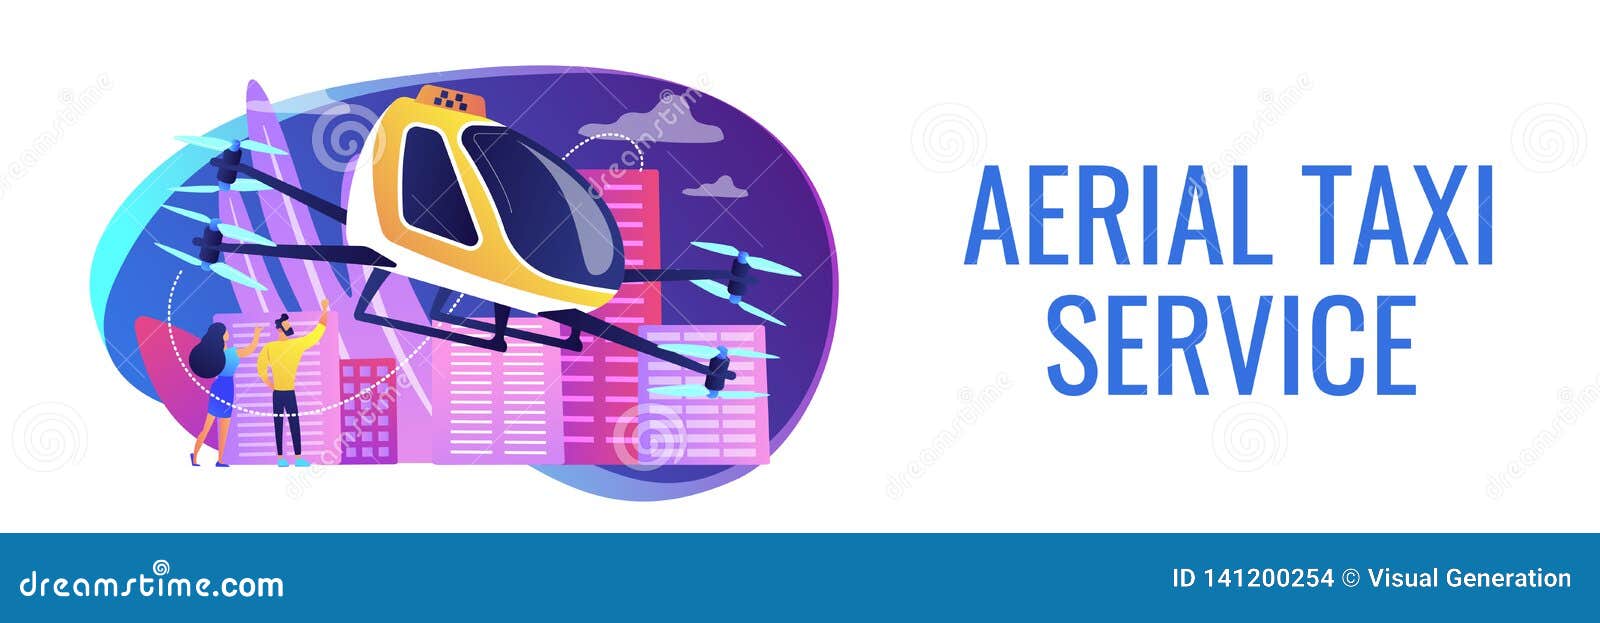 aerial taxi service concept banner header.